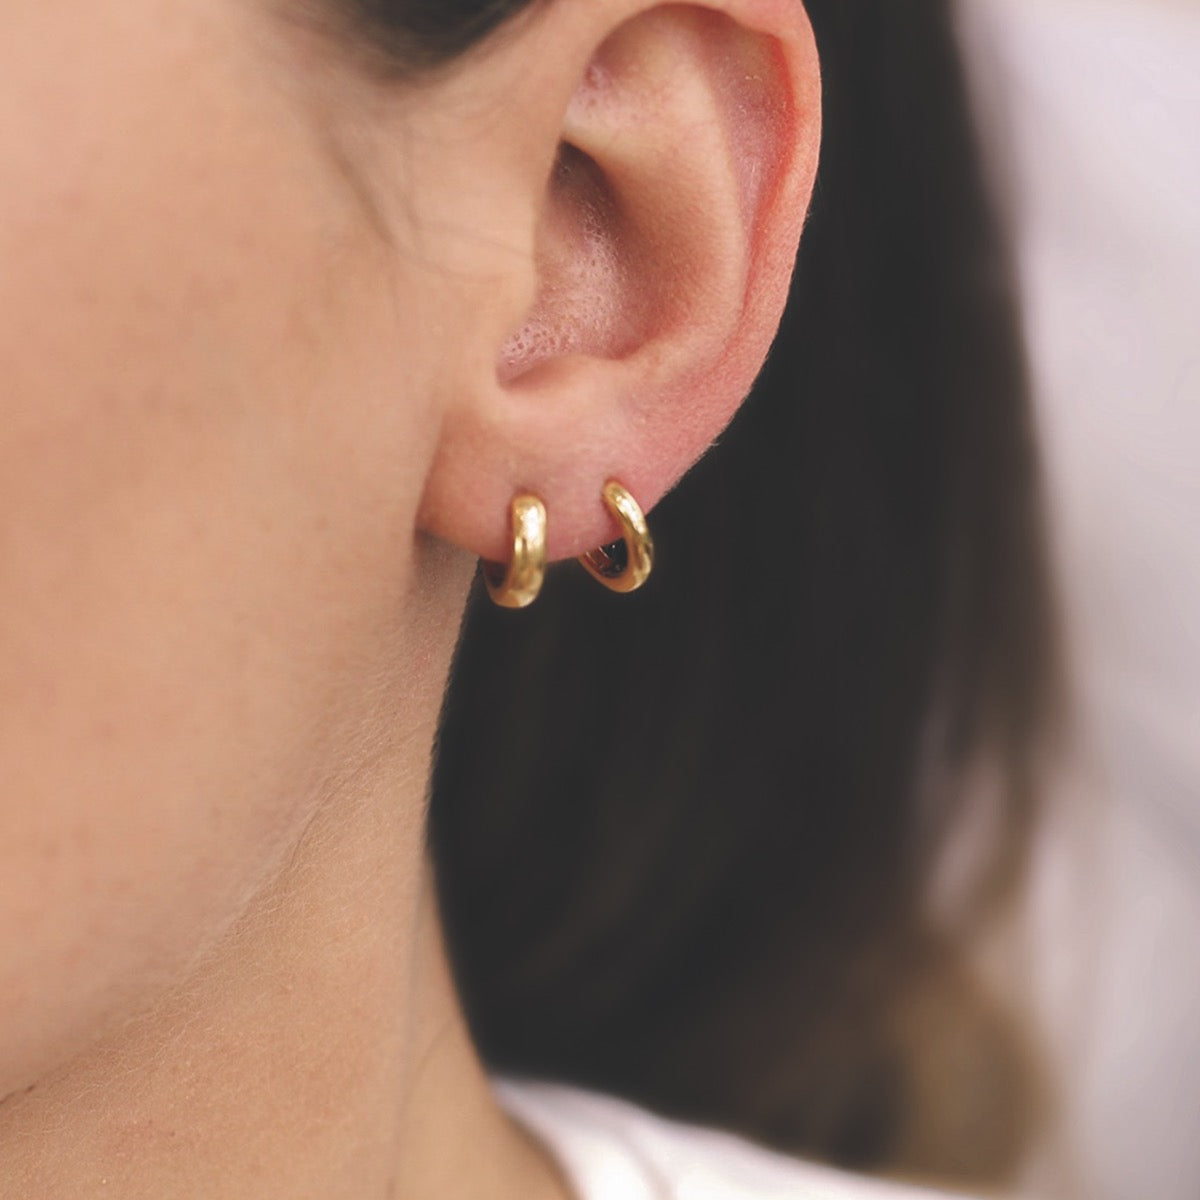 2mm Gold plated huggie earrings